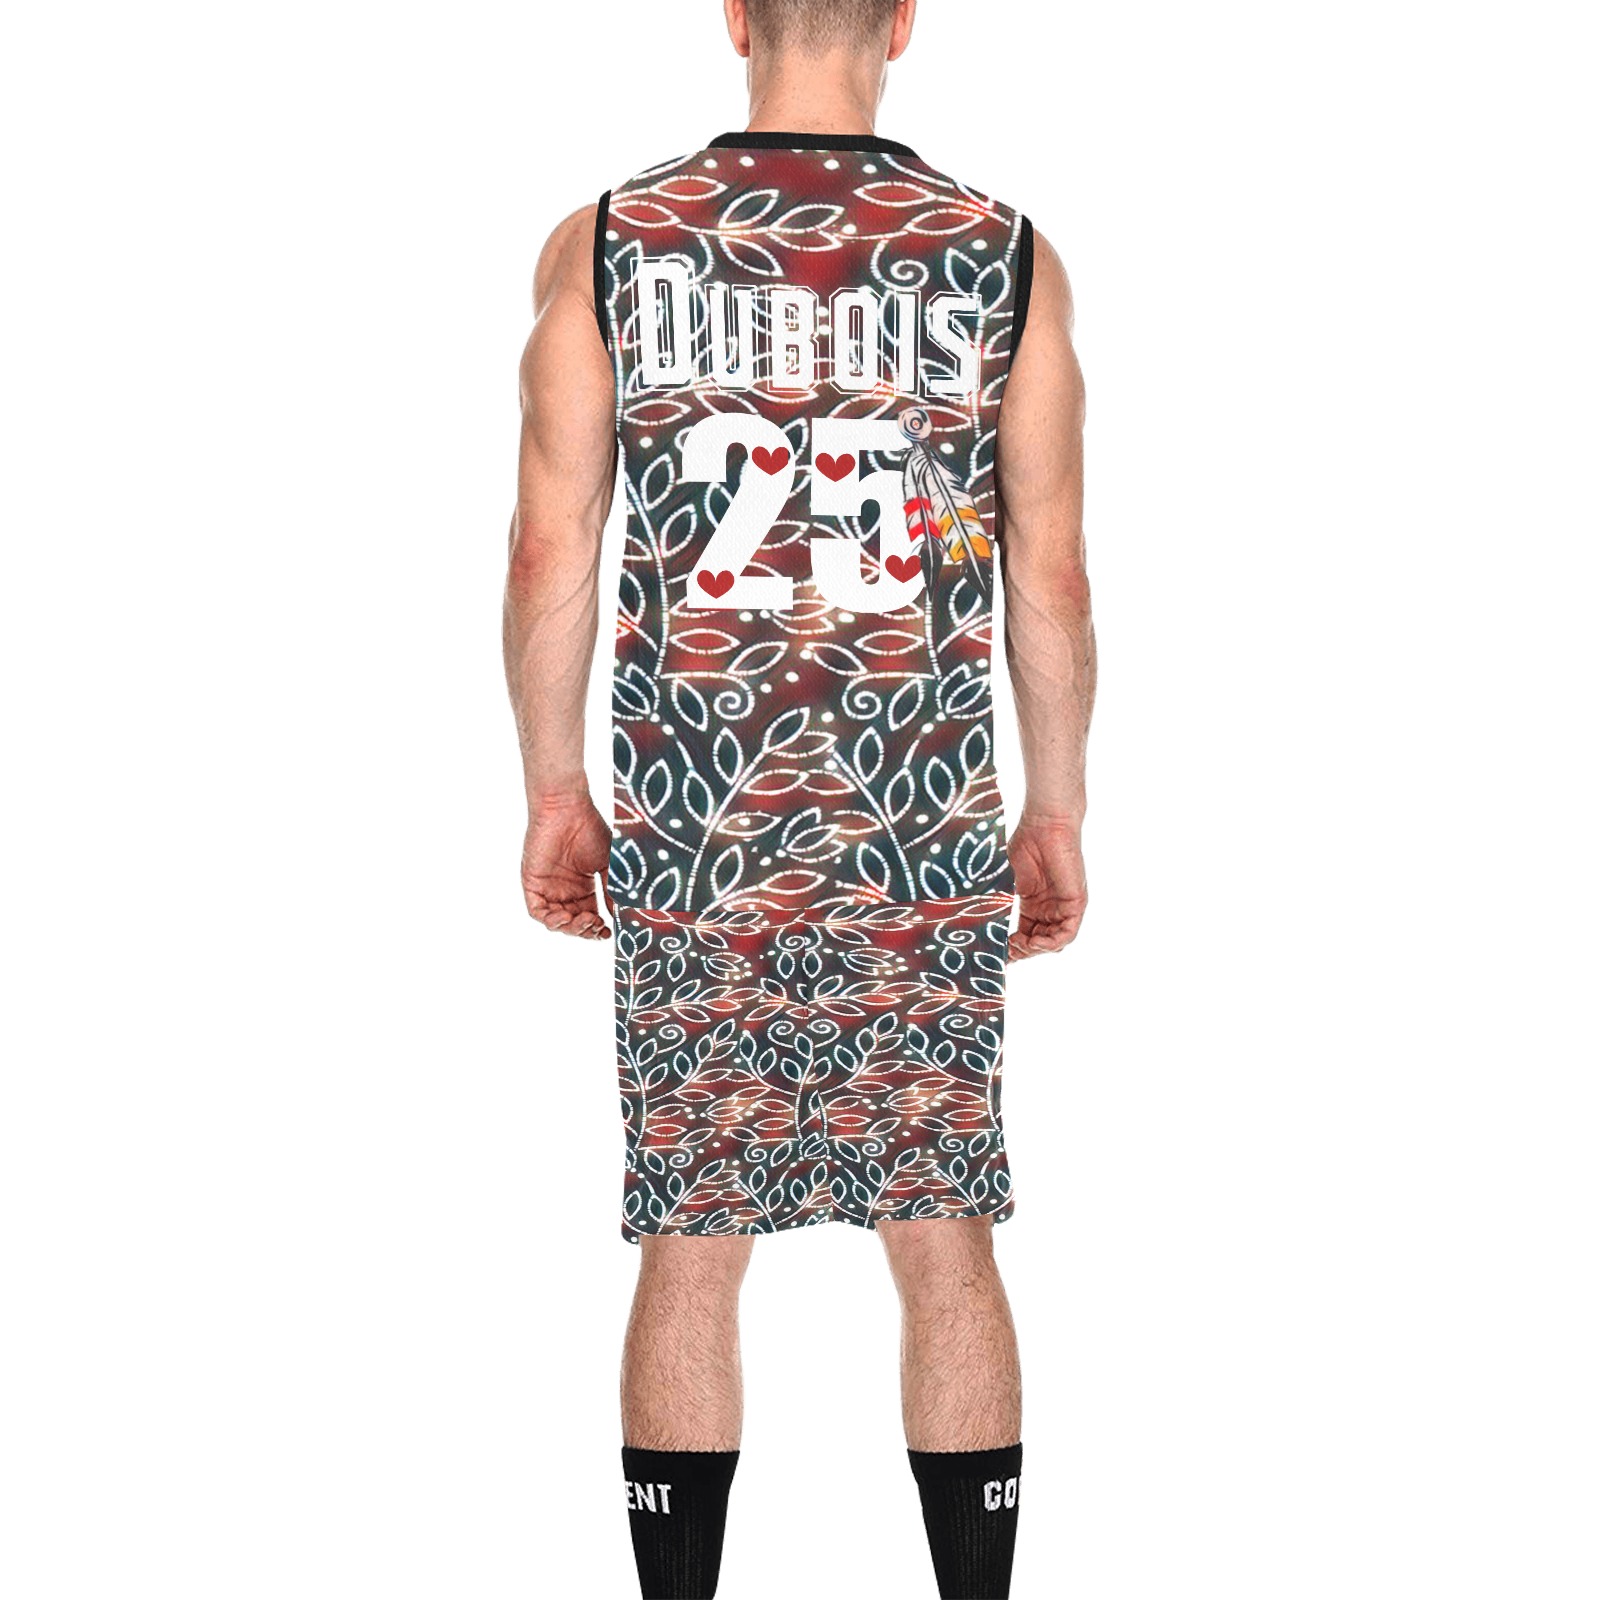 MMIW Dubois All Over Print Basketball Uniform